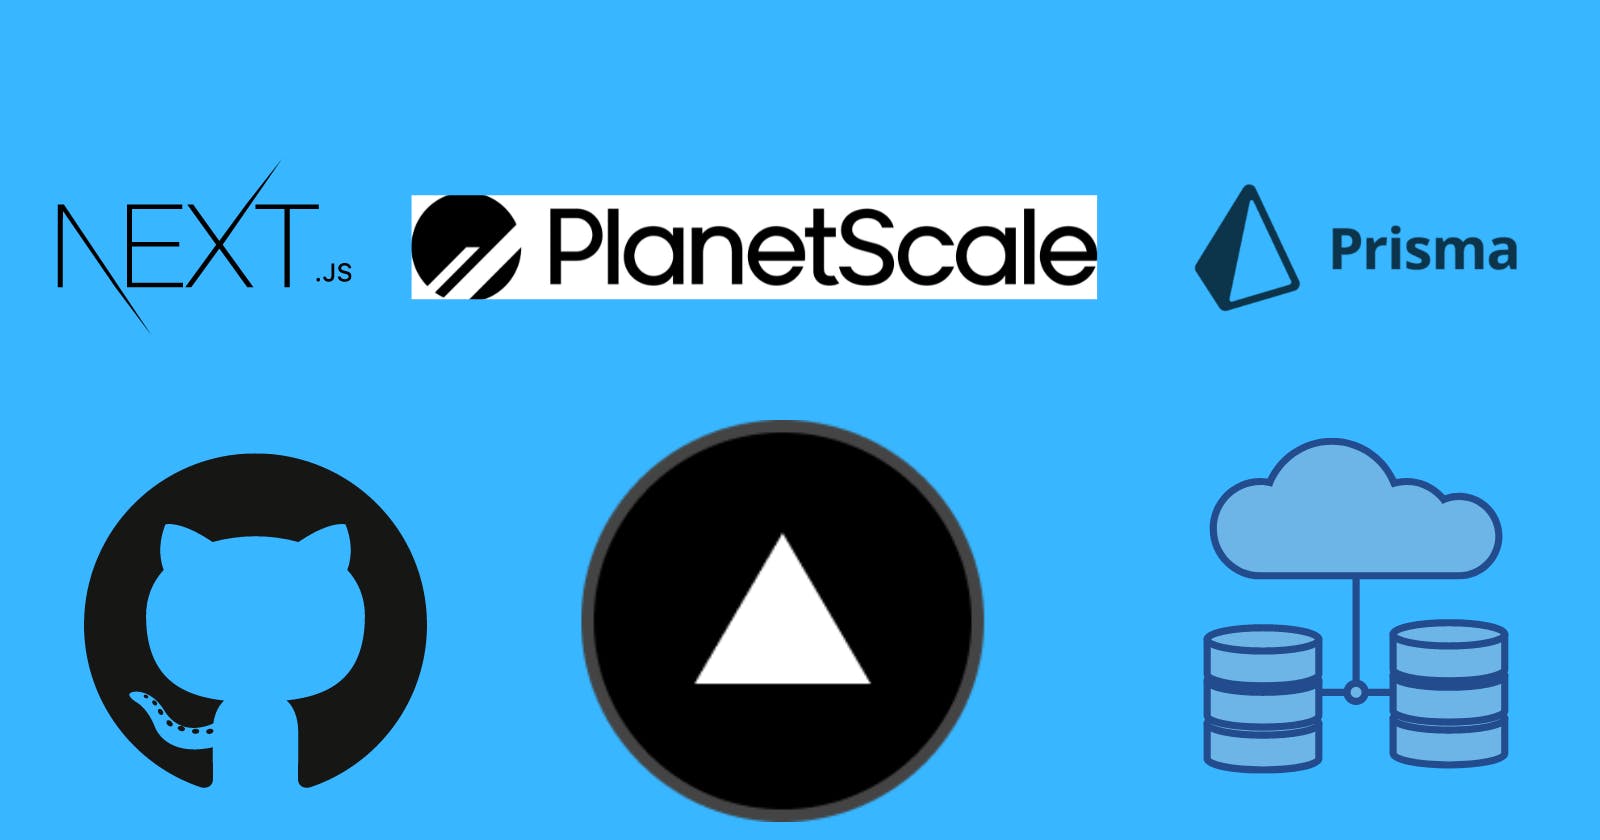 URLShortner: Building a Next.js app using Planetscale and Prisma